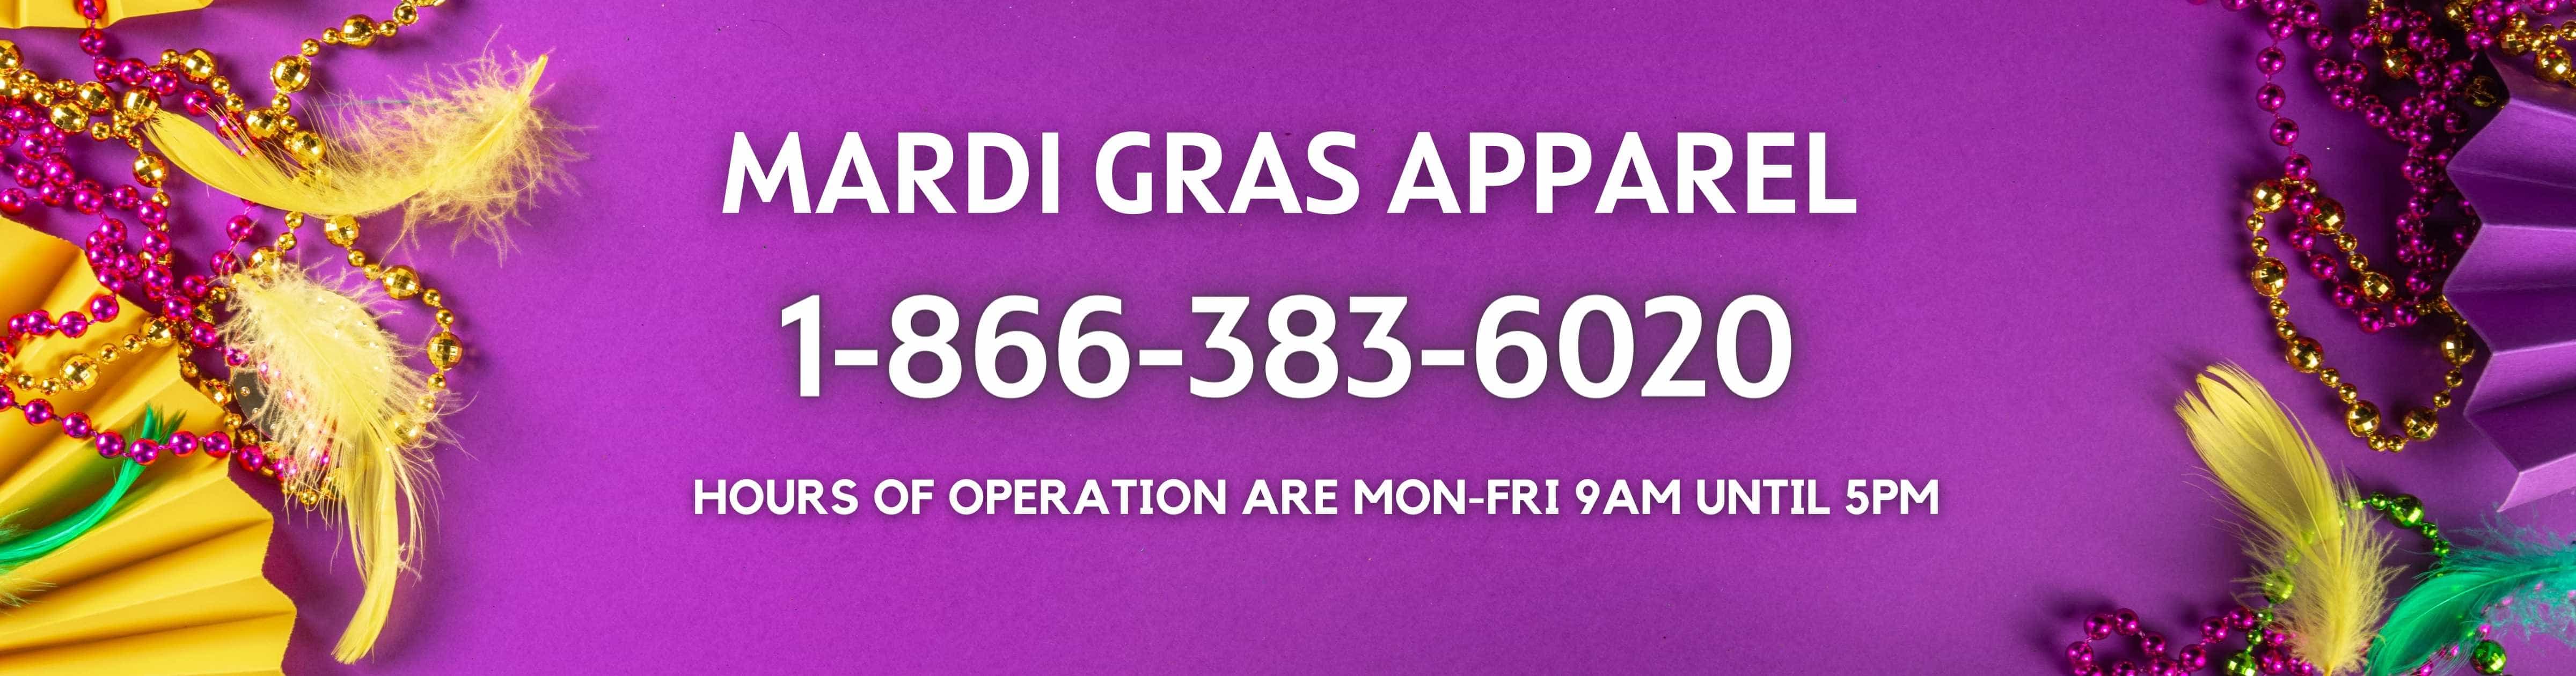 Mardi Gras Apparel Location and Phone Number Address 658 Leson Court Harvey, LA 70058 / Phone 1-866-383-6020